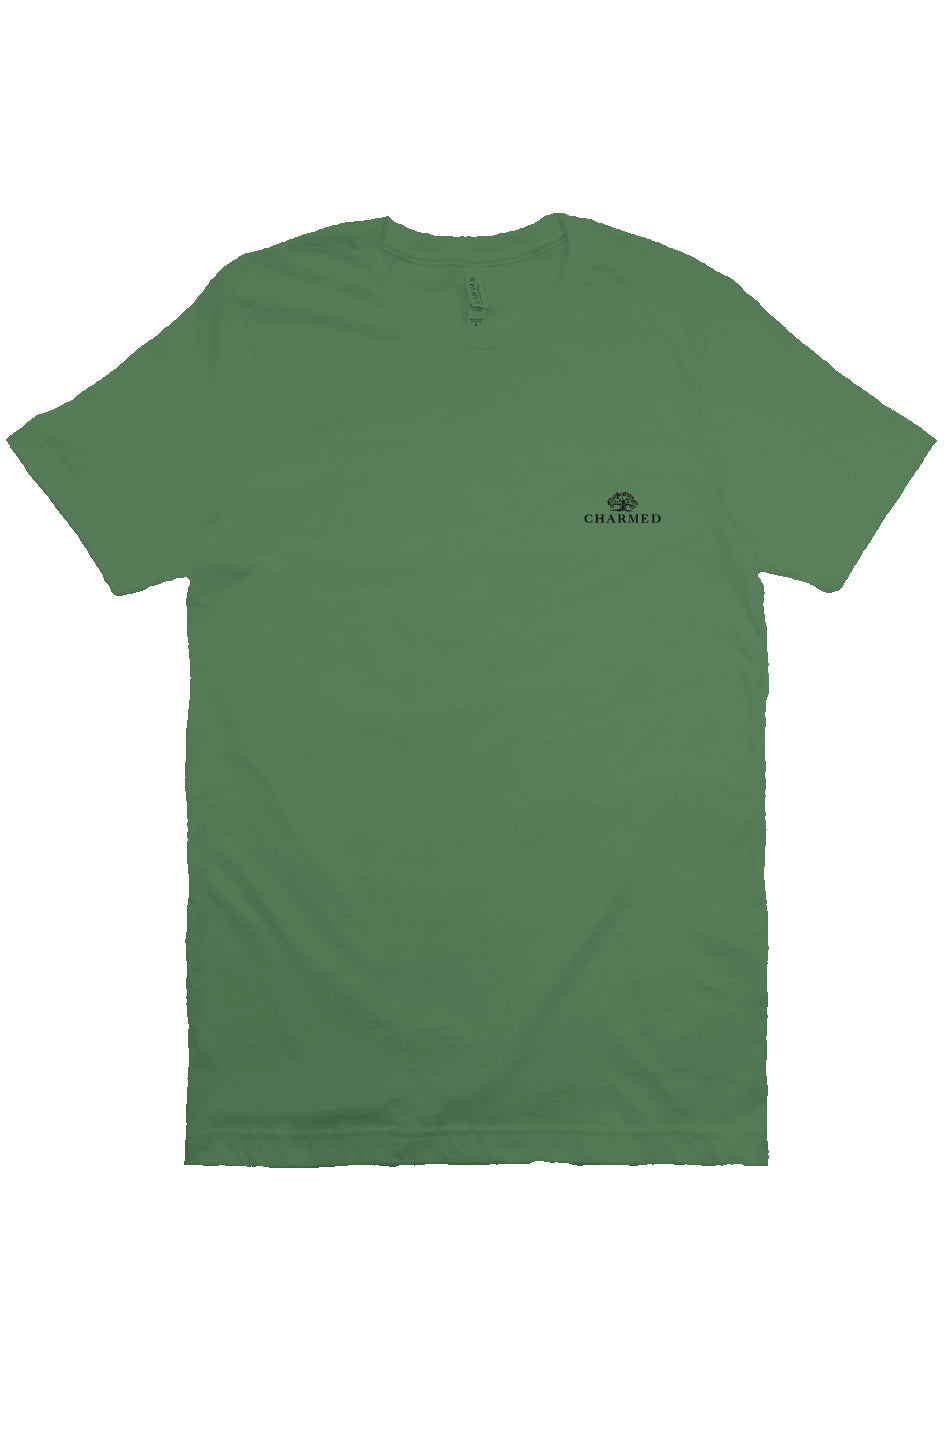 Peter Pan Unisex Adult T-shirt leaf